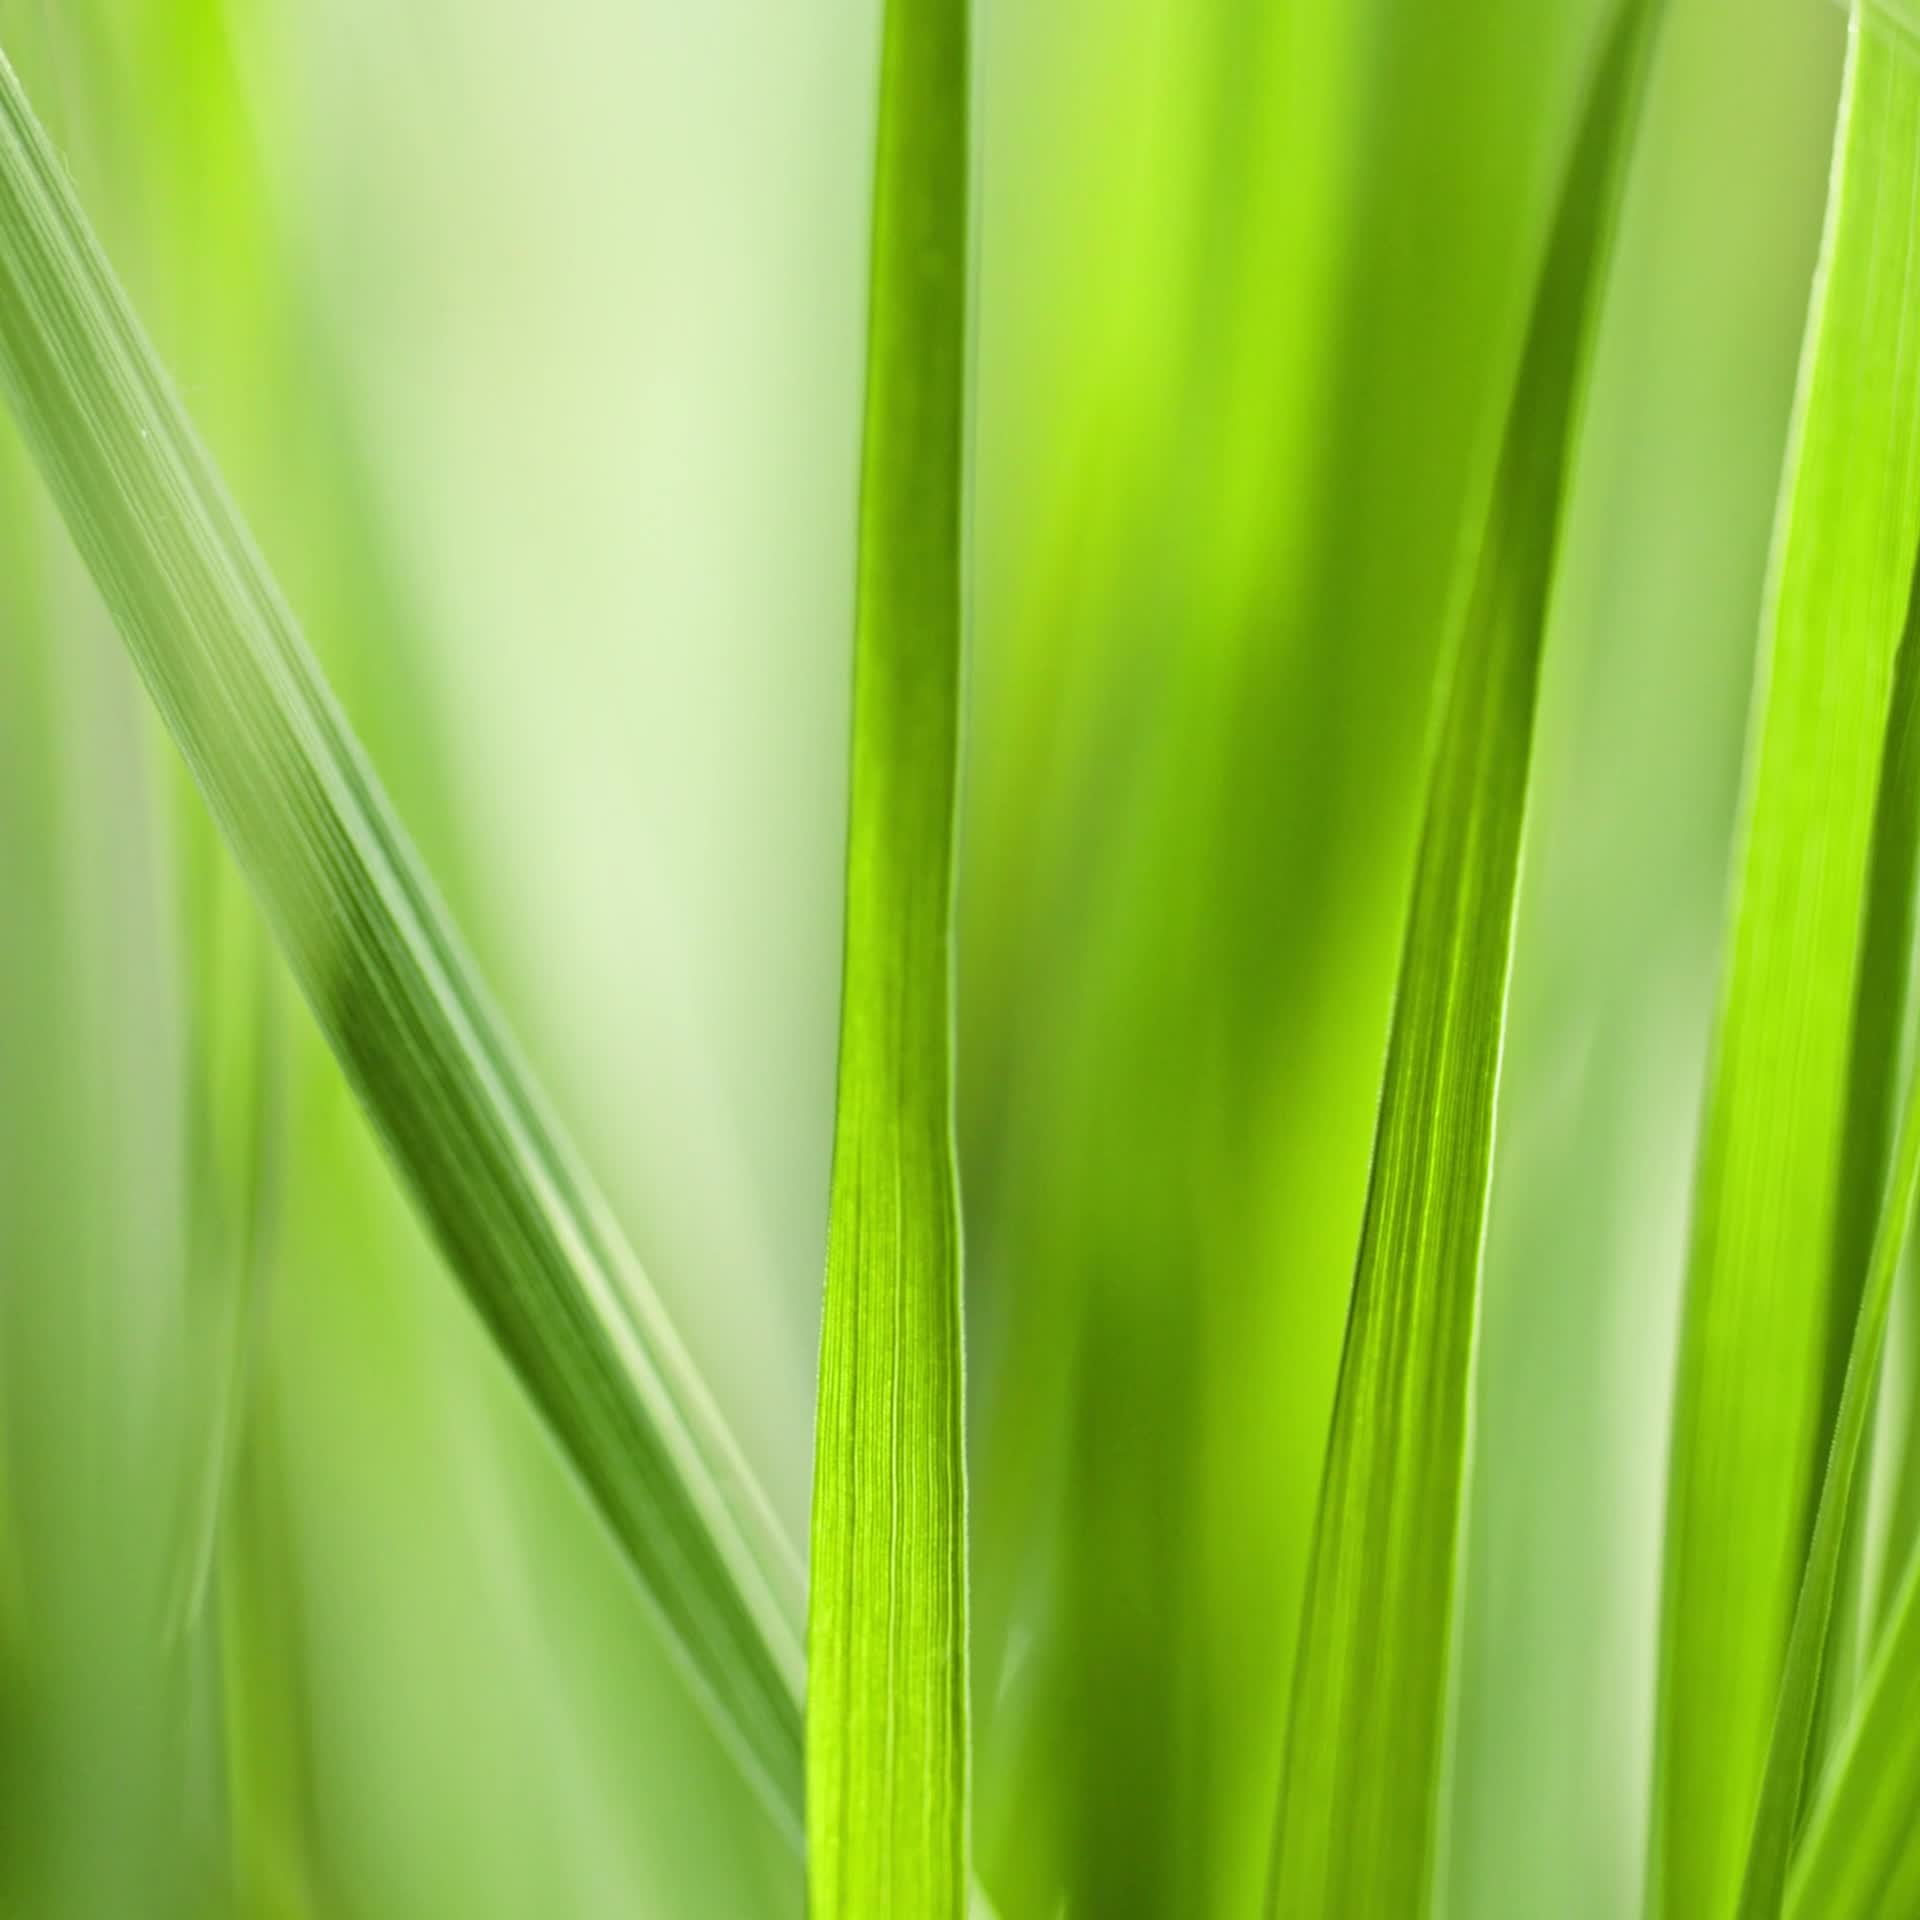 HEDERSAM Scented potpourri, Fresh grass/light green, 3 oz - IKEA